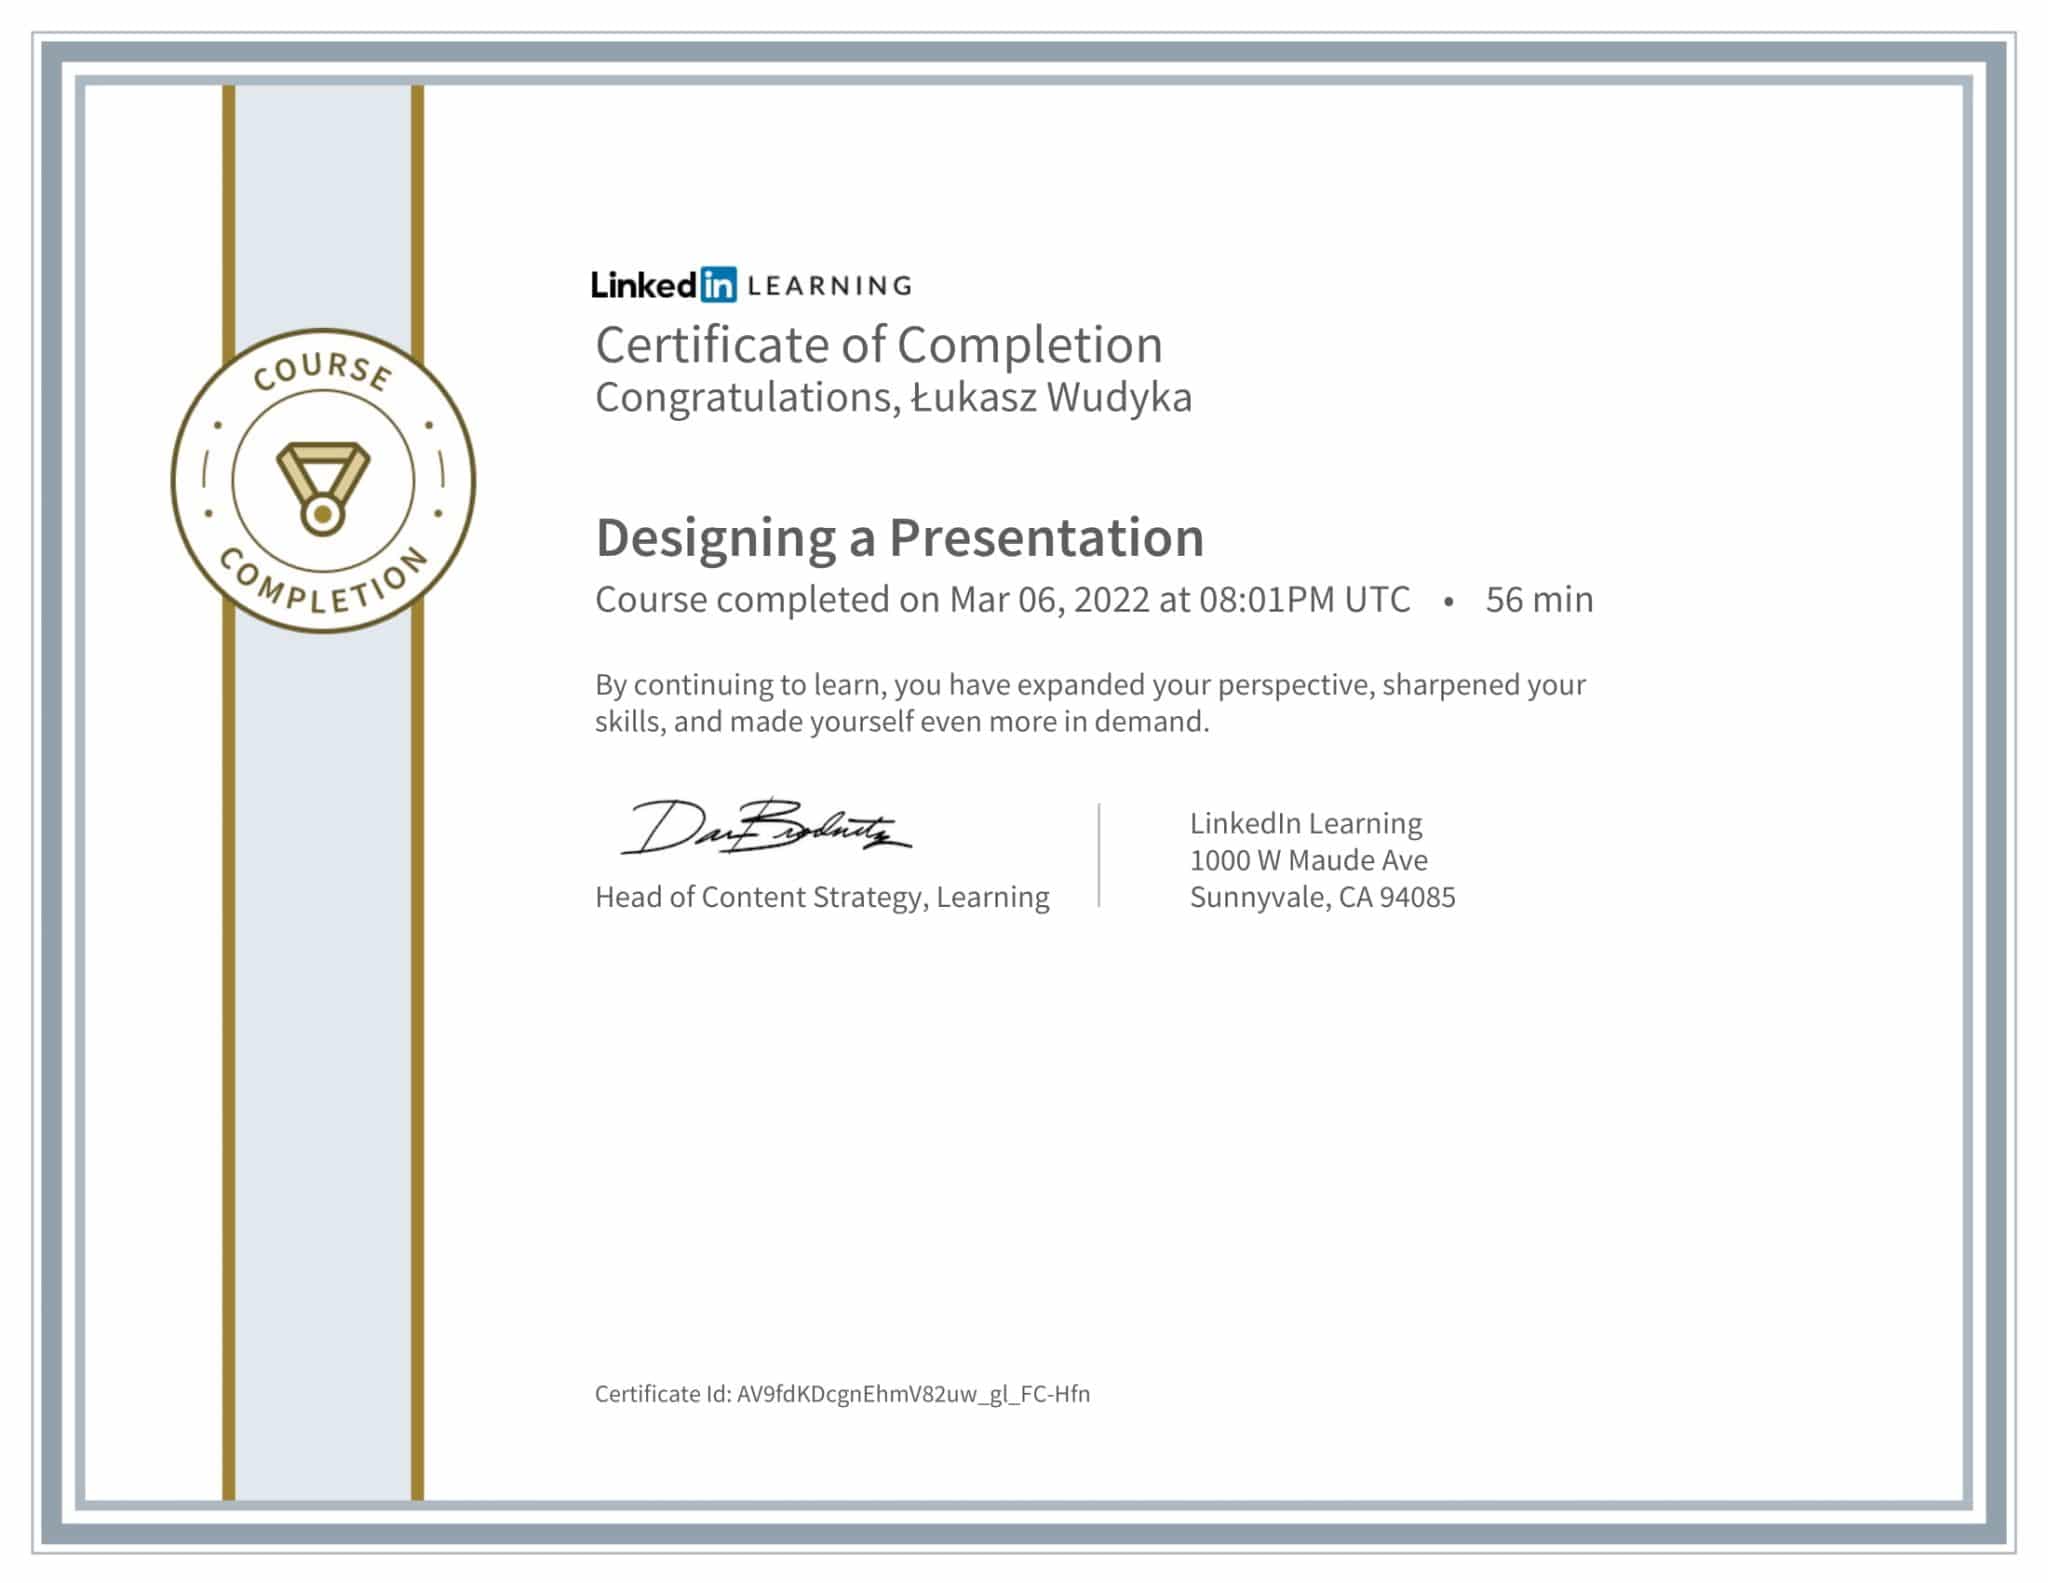 CertificateOfCompletion_Designing a Presentation-1